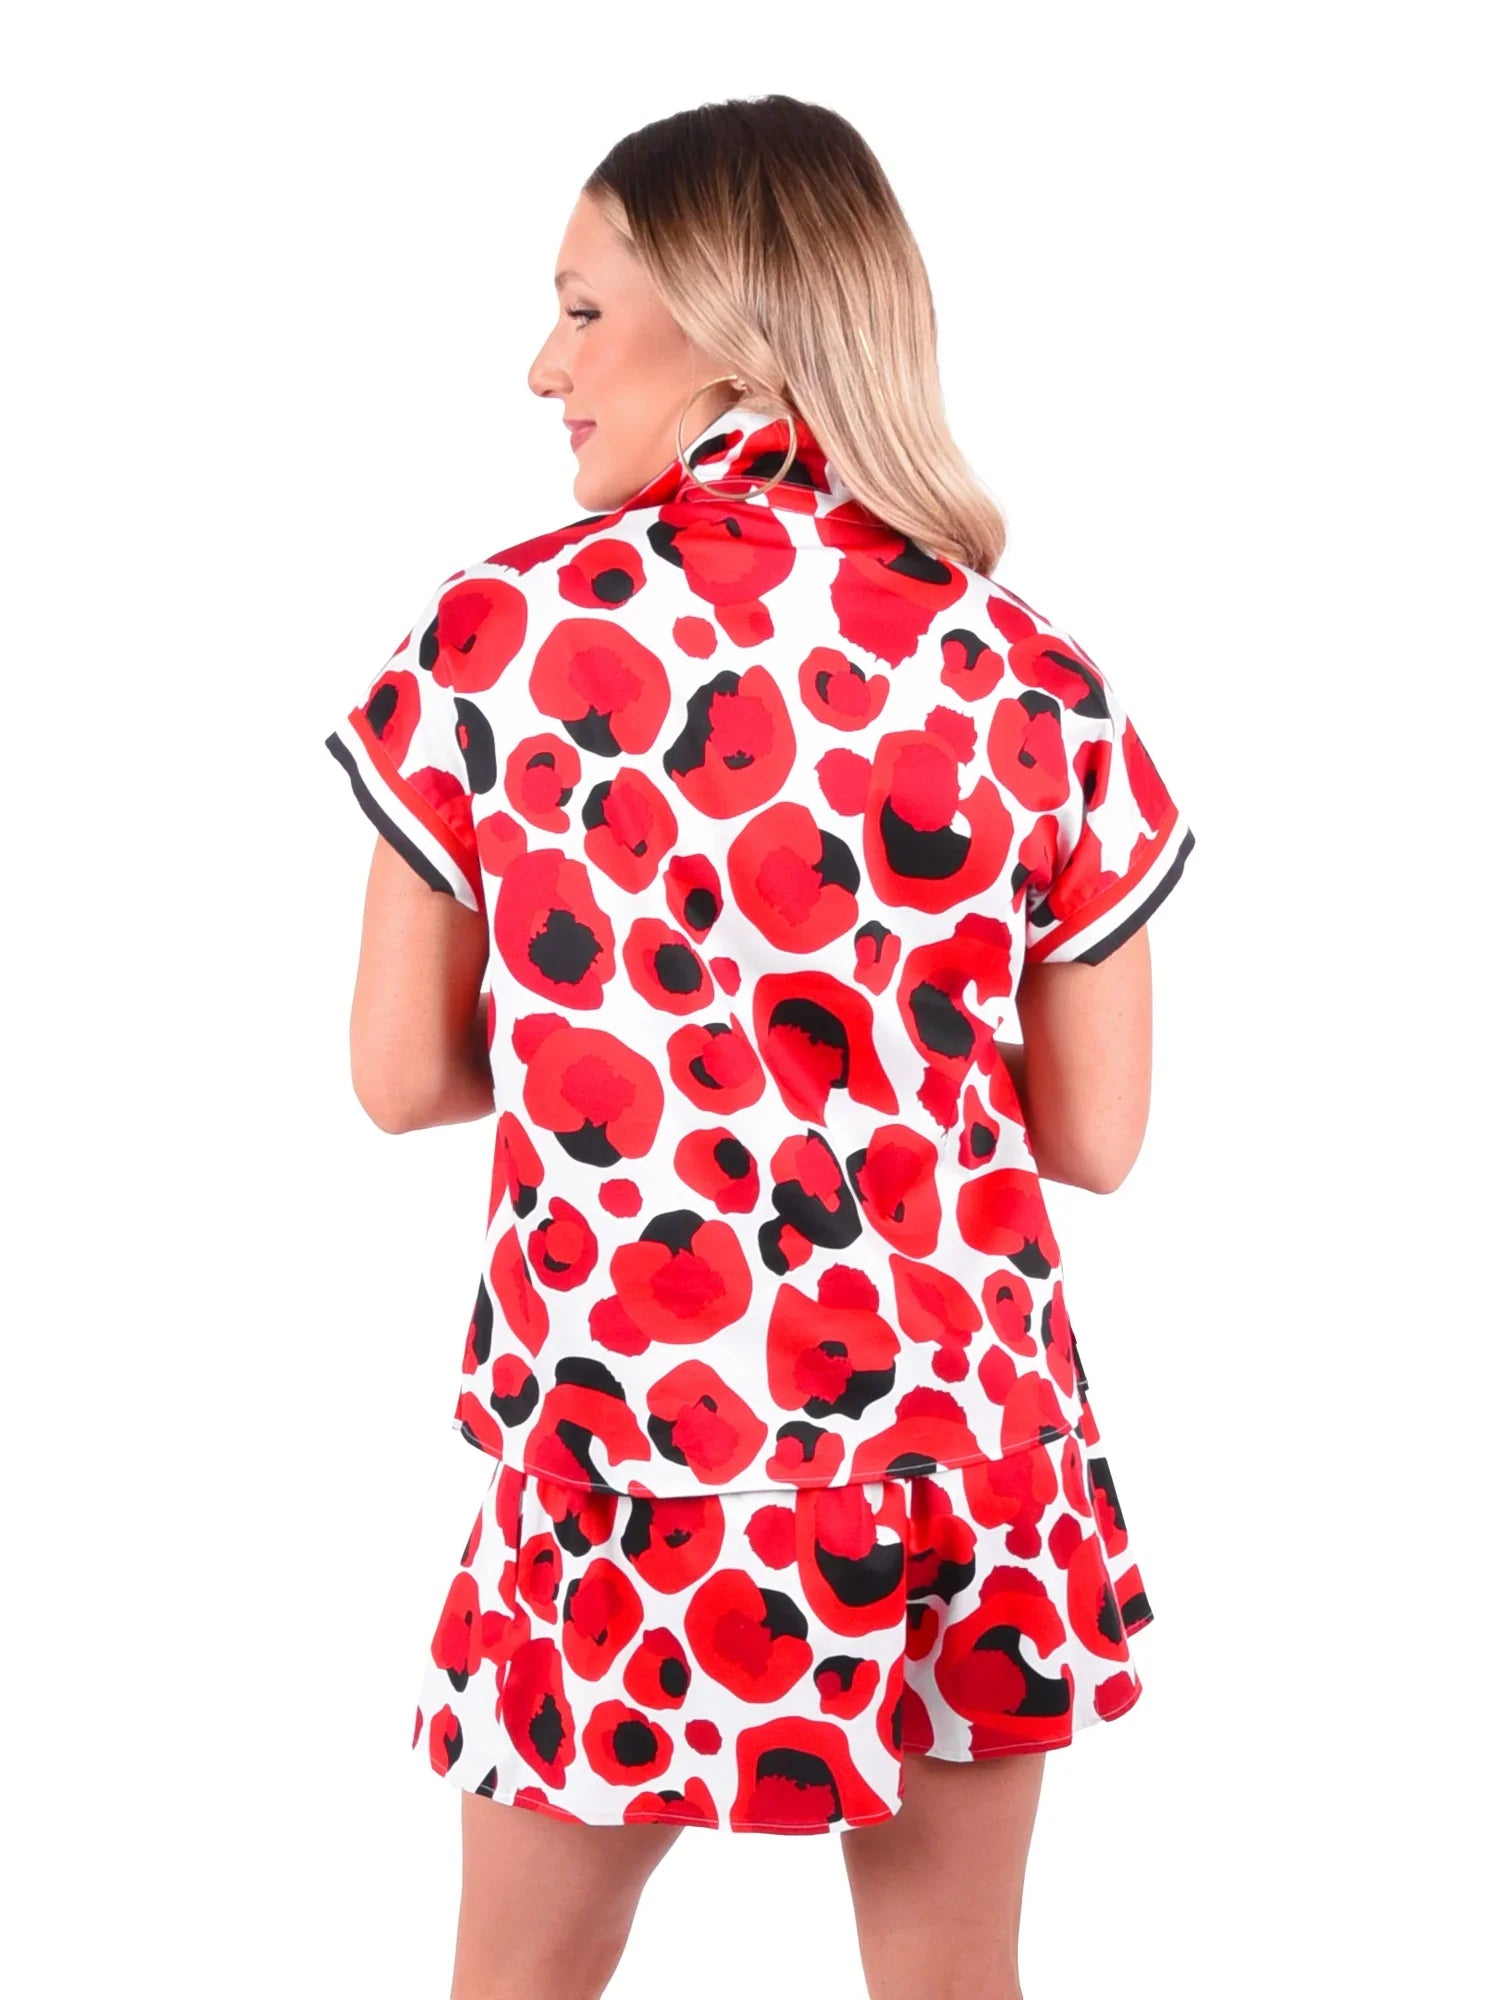 Poppy Pullover Top in Red Collegiate Cheetah